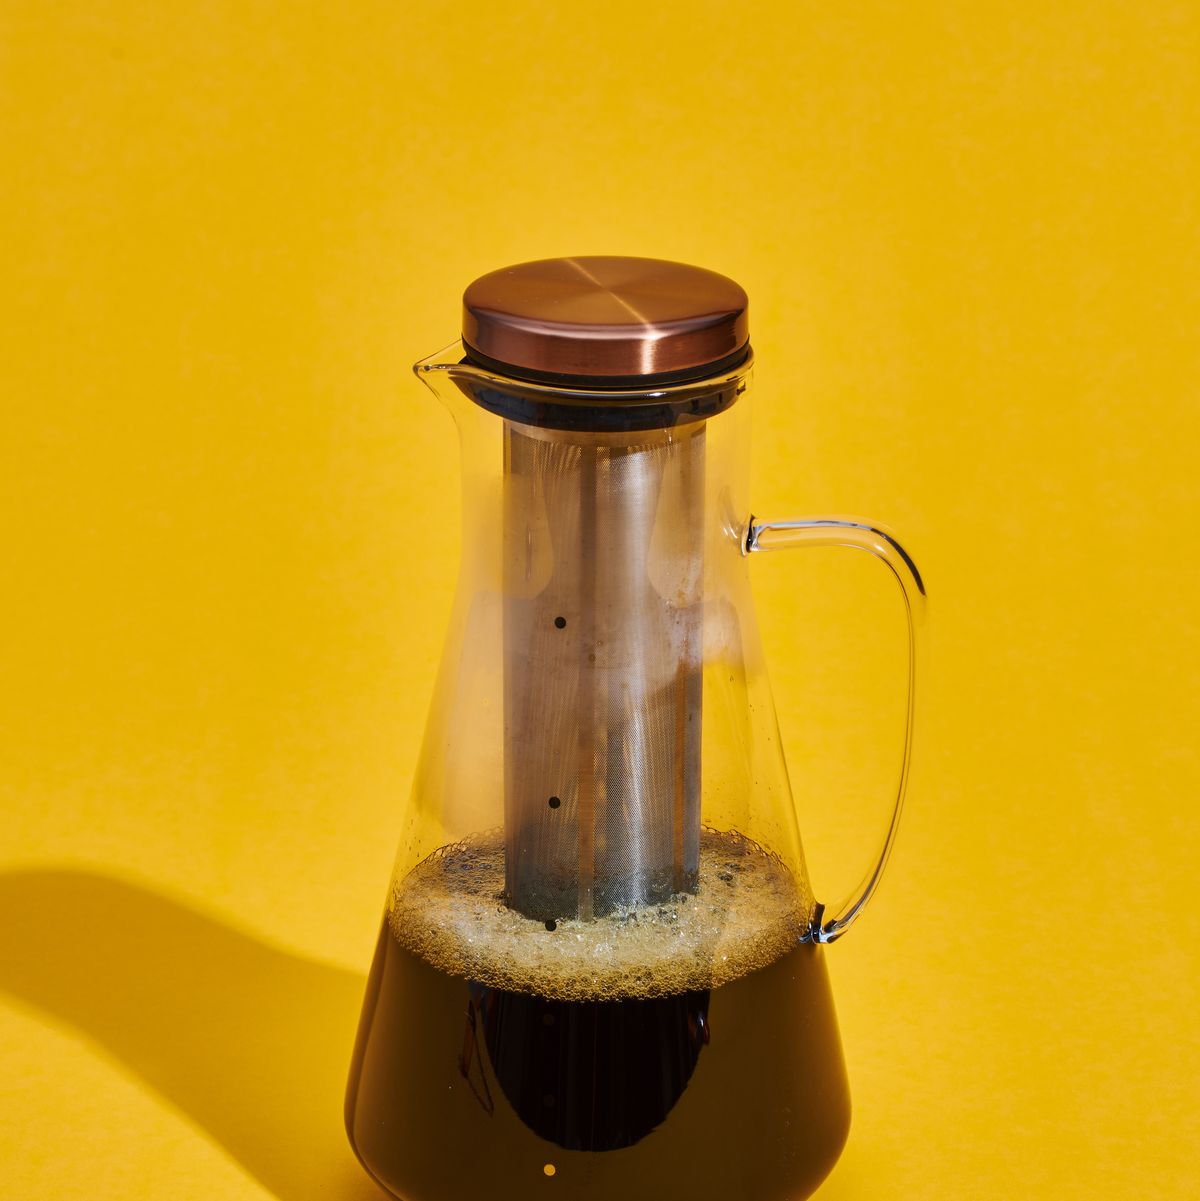 Minimalist Pour Over Coffee Maker Tutorial - Lazy Guy DIY